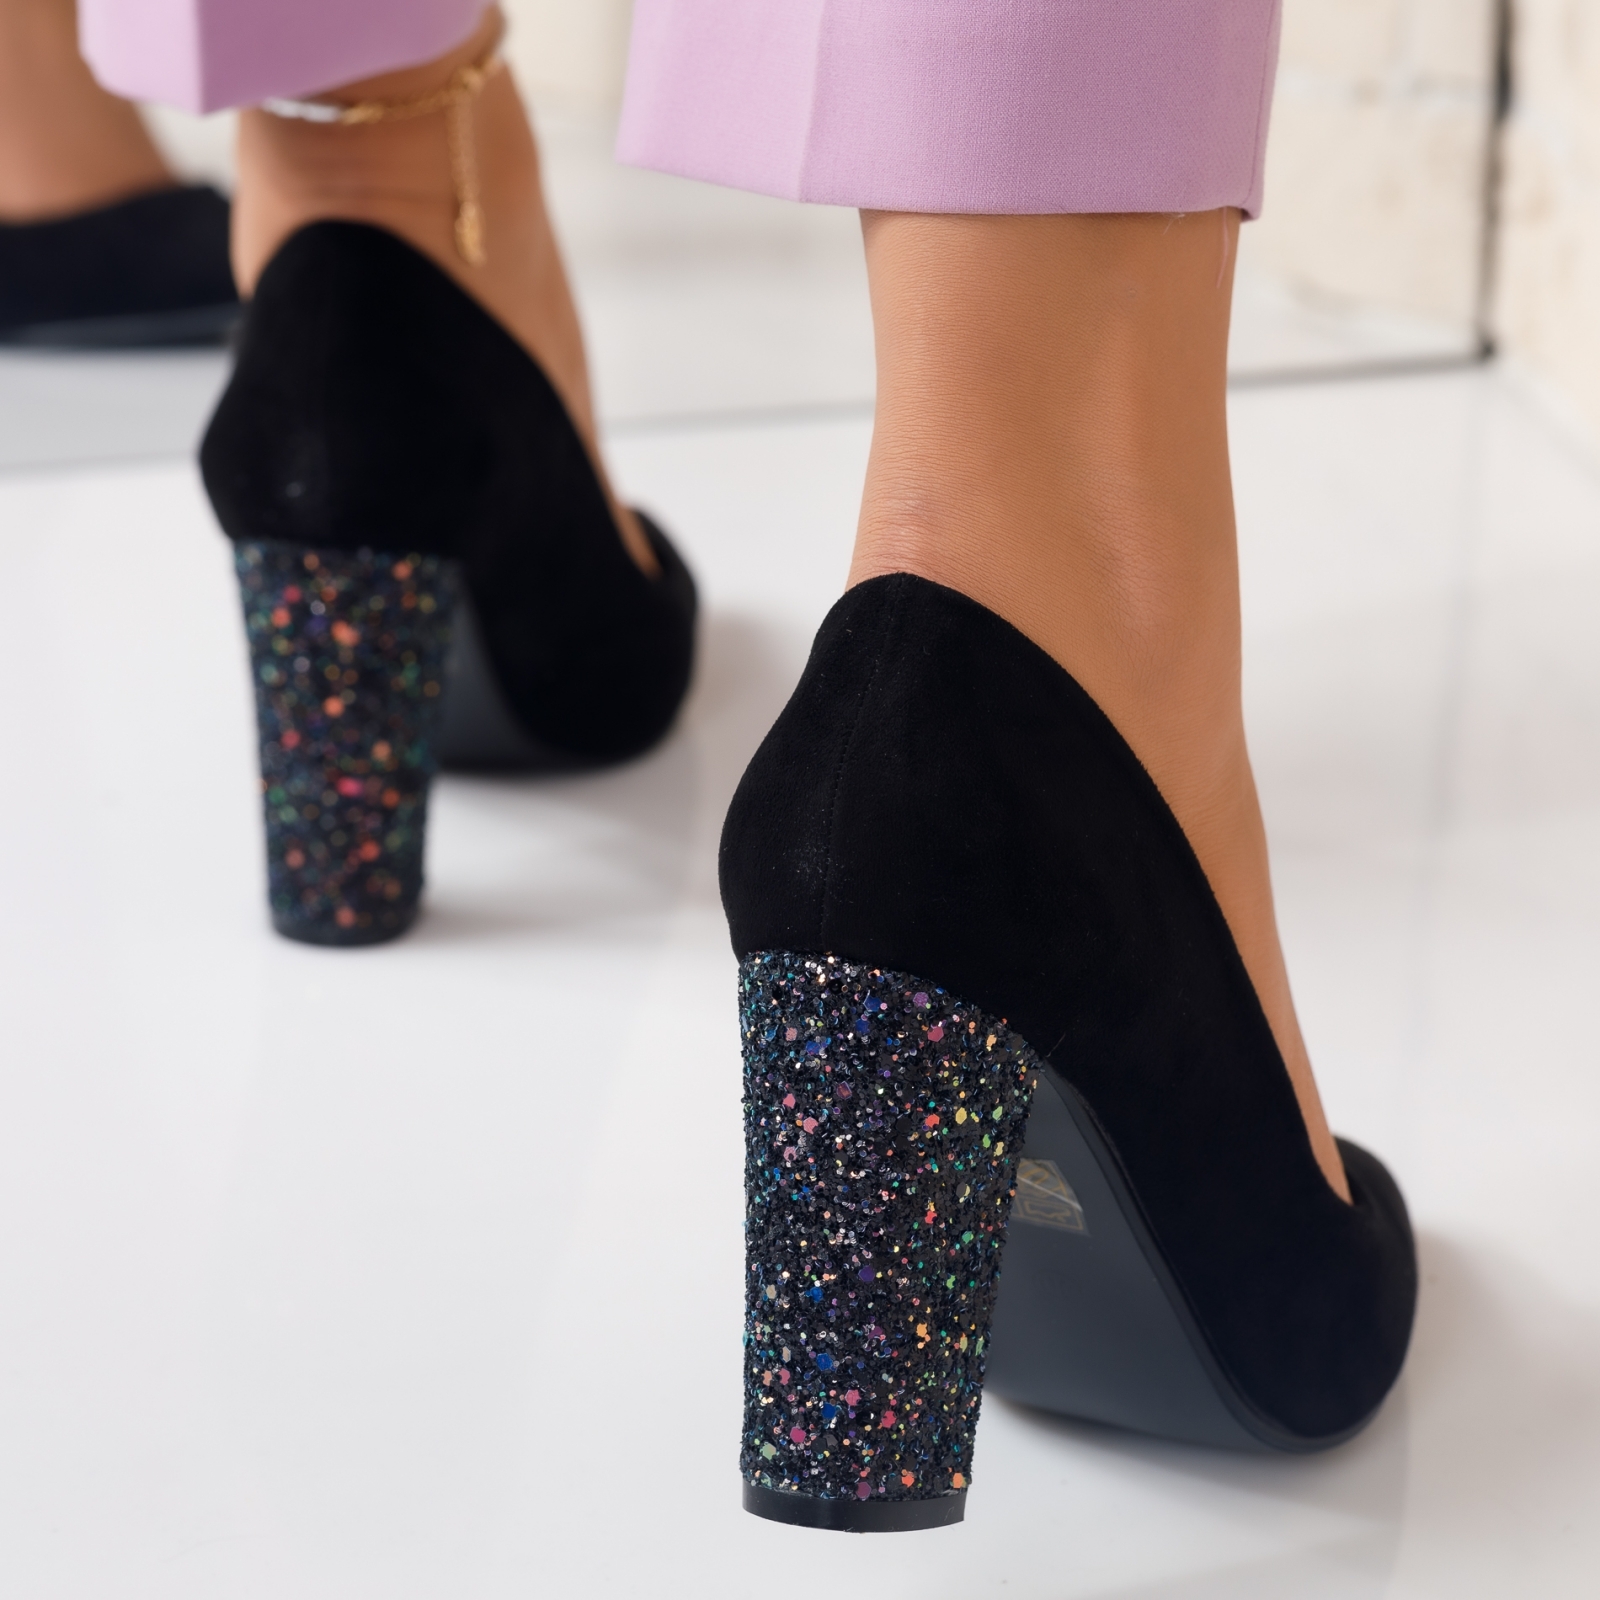 Pantofi Dama cu Toc Katherine Negri2 #3924M